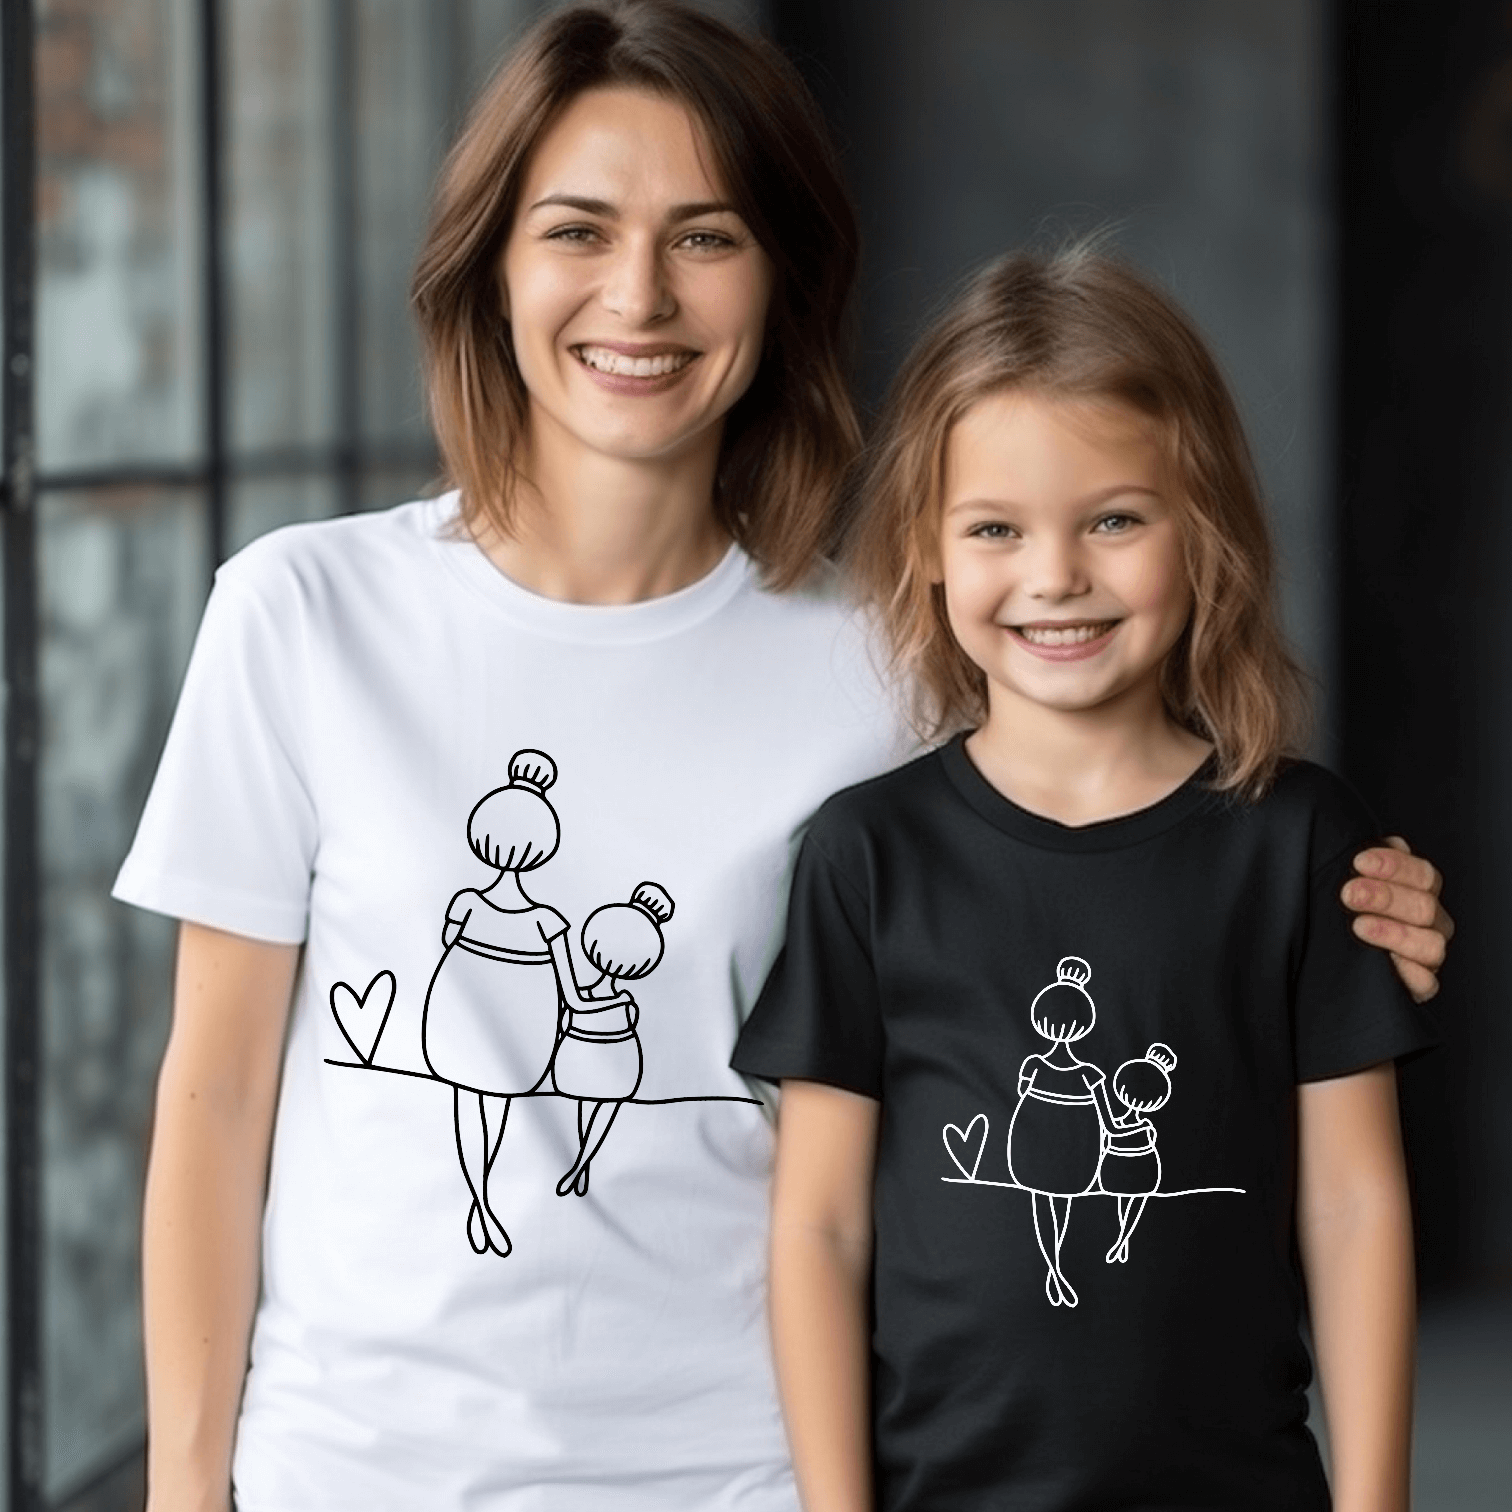 Mami e a camisa de menina amor